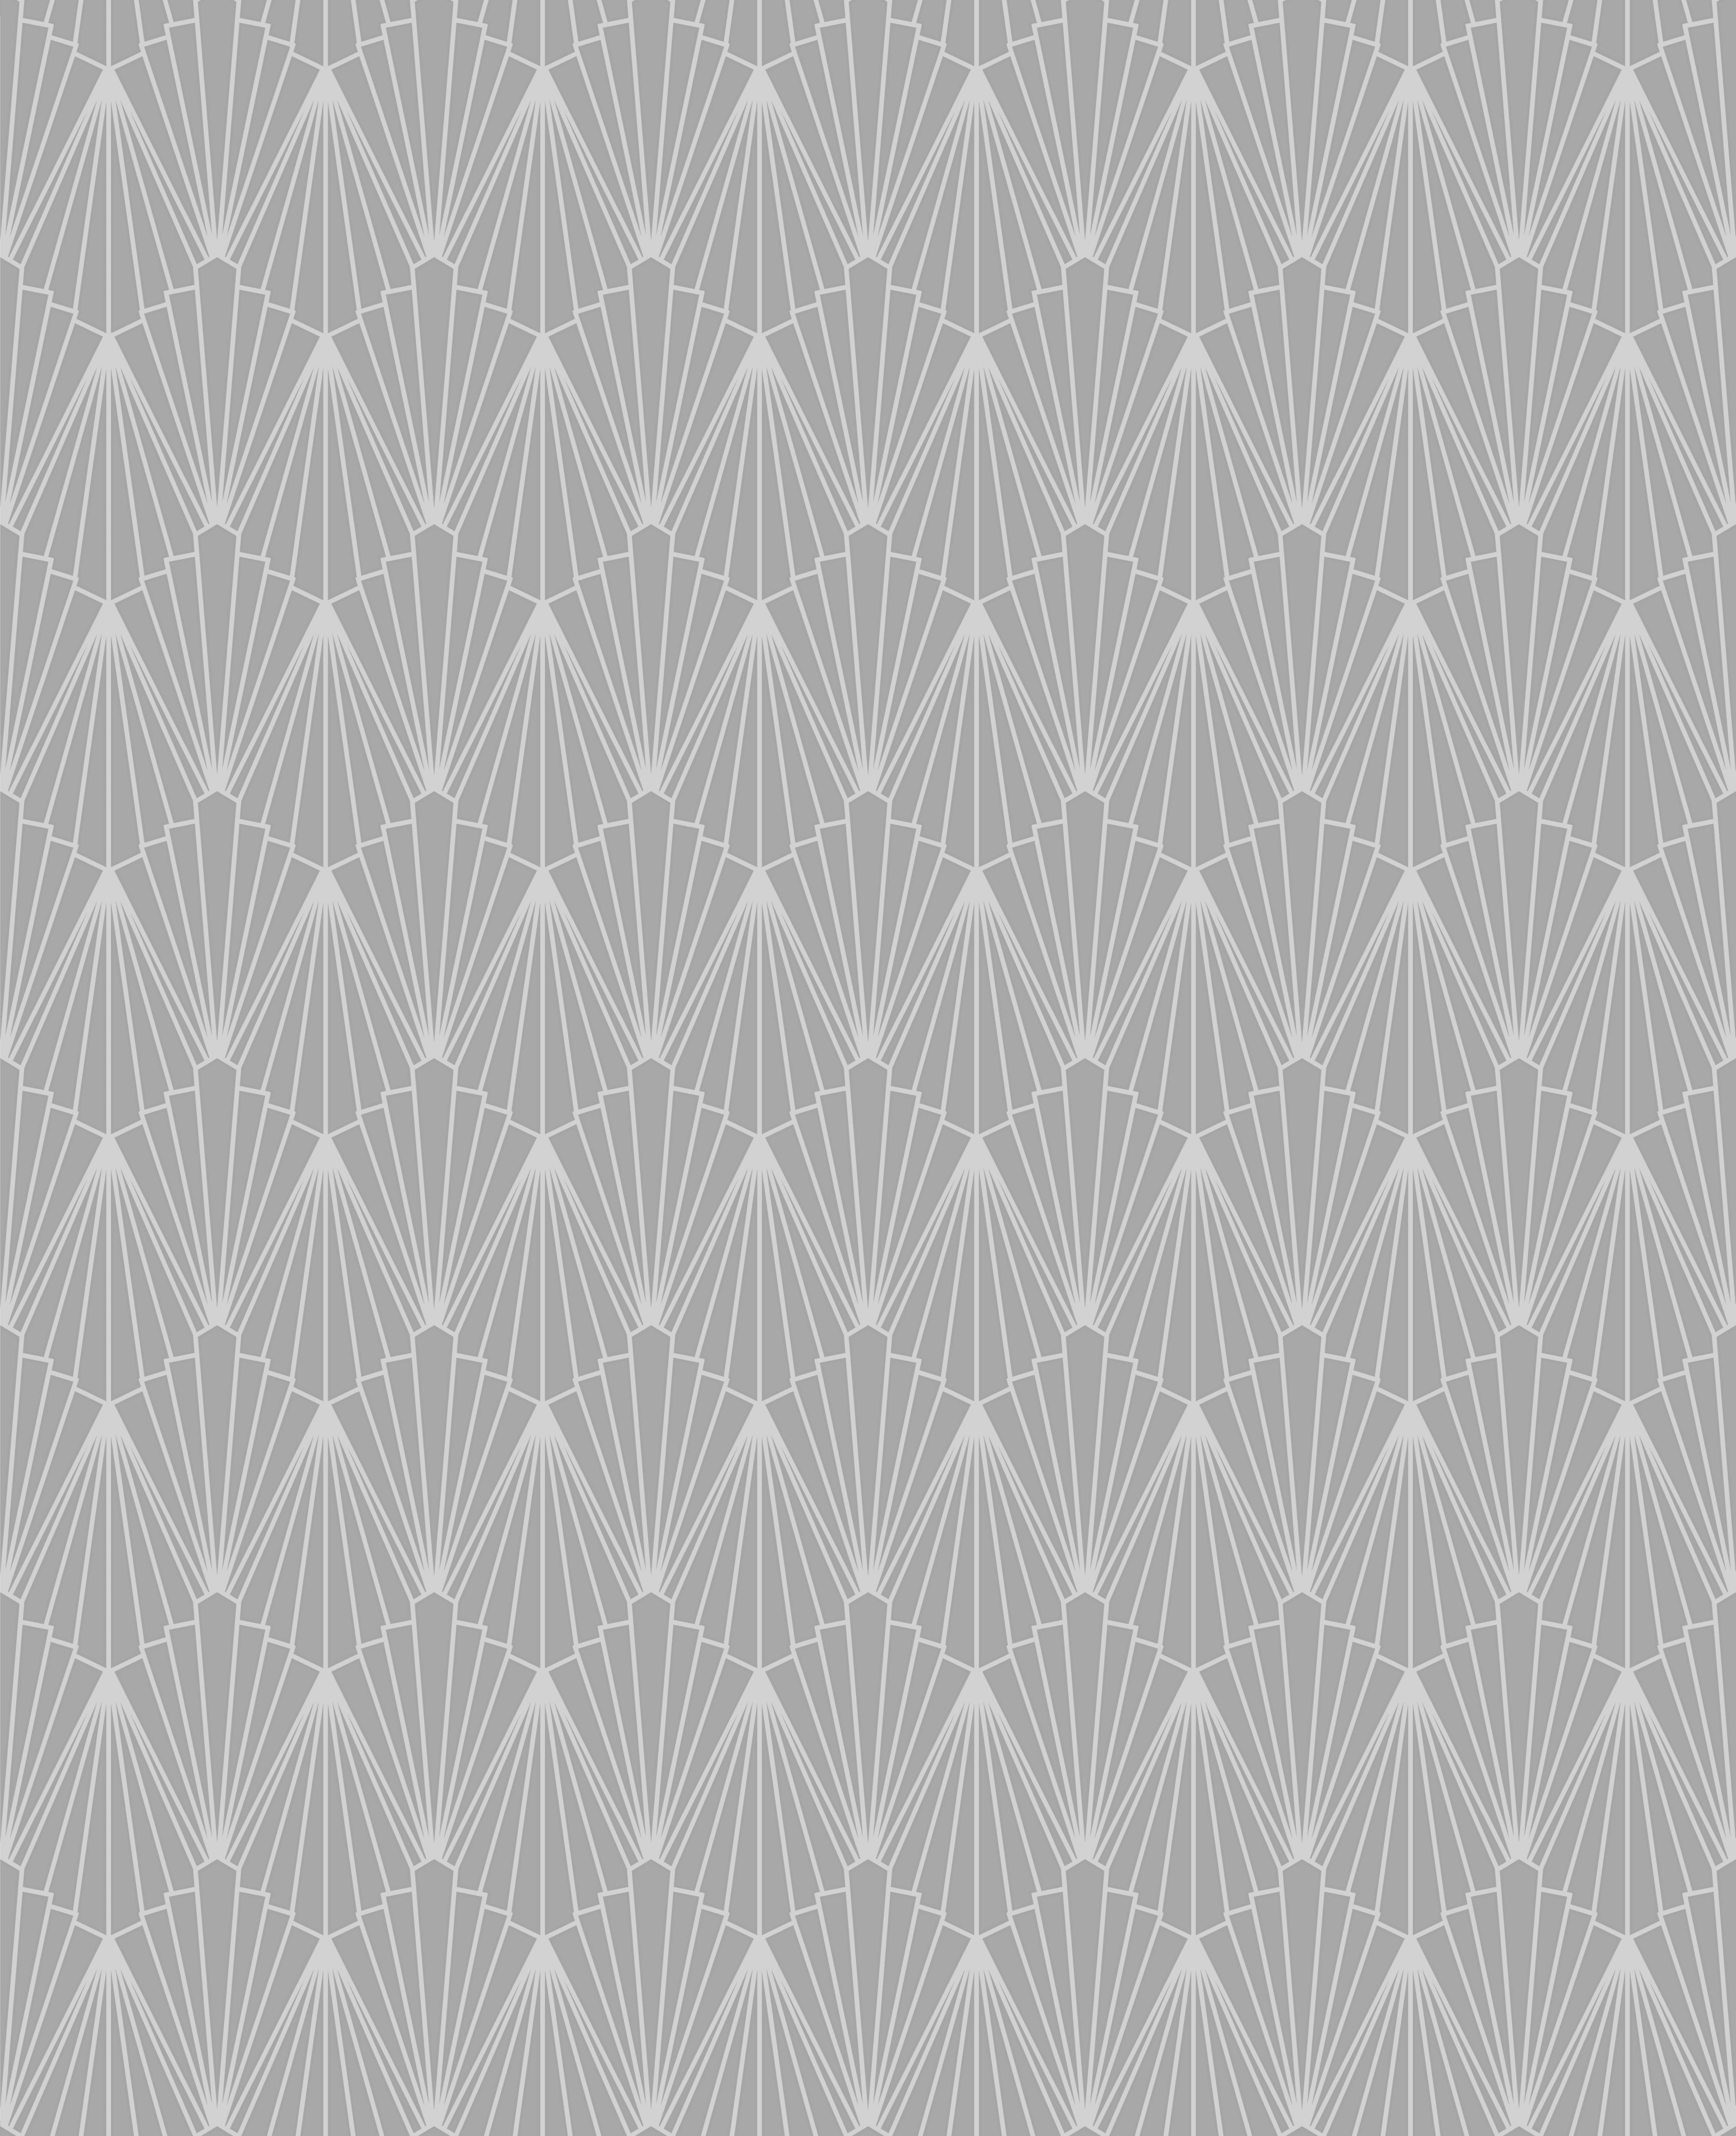 Superfresco Easy Deco Metallic effect Geometric Embossed Wallpaper